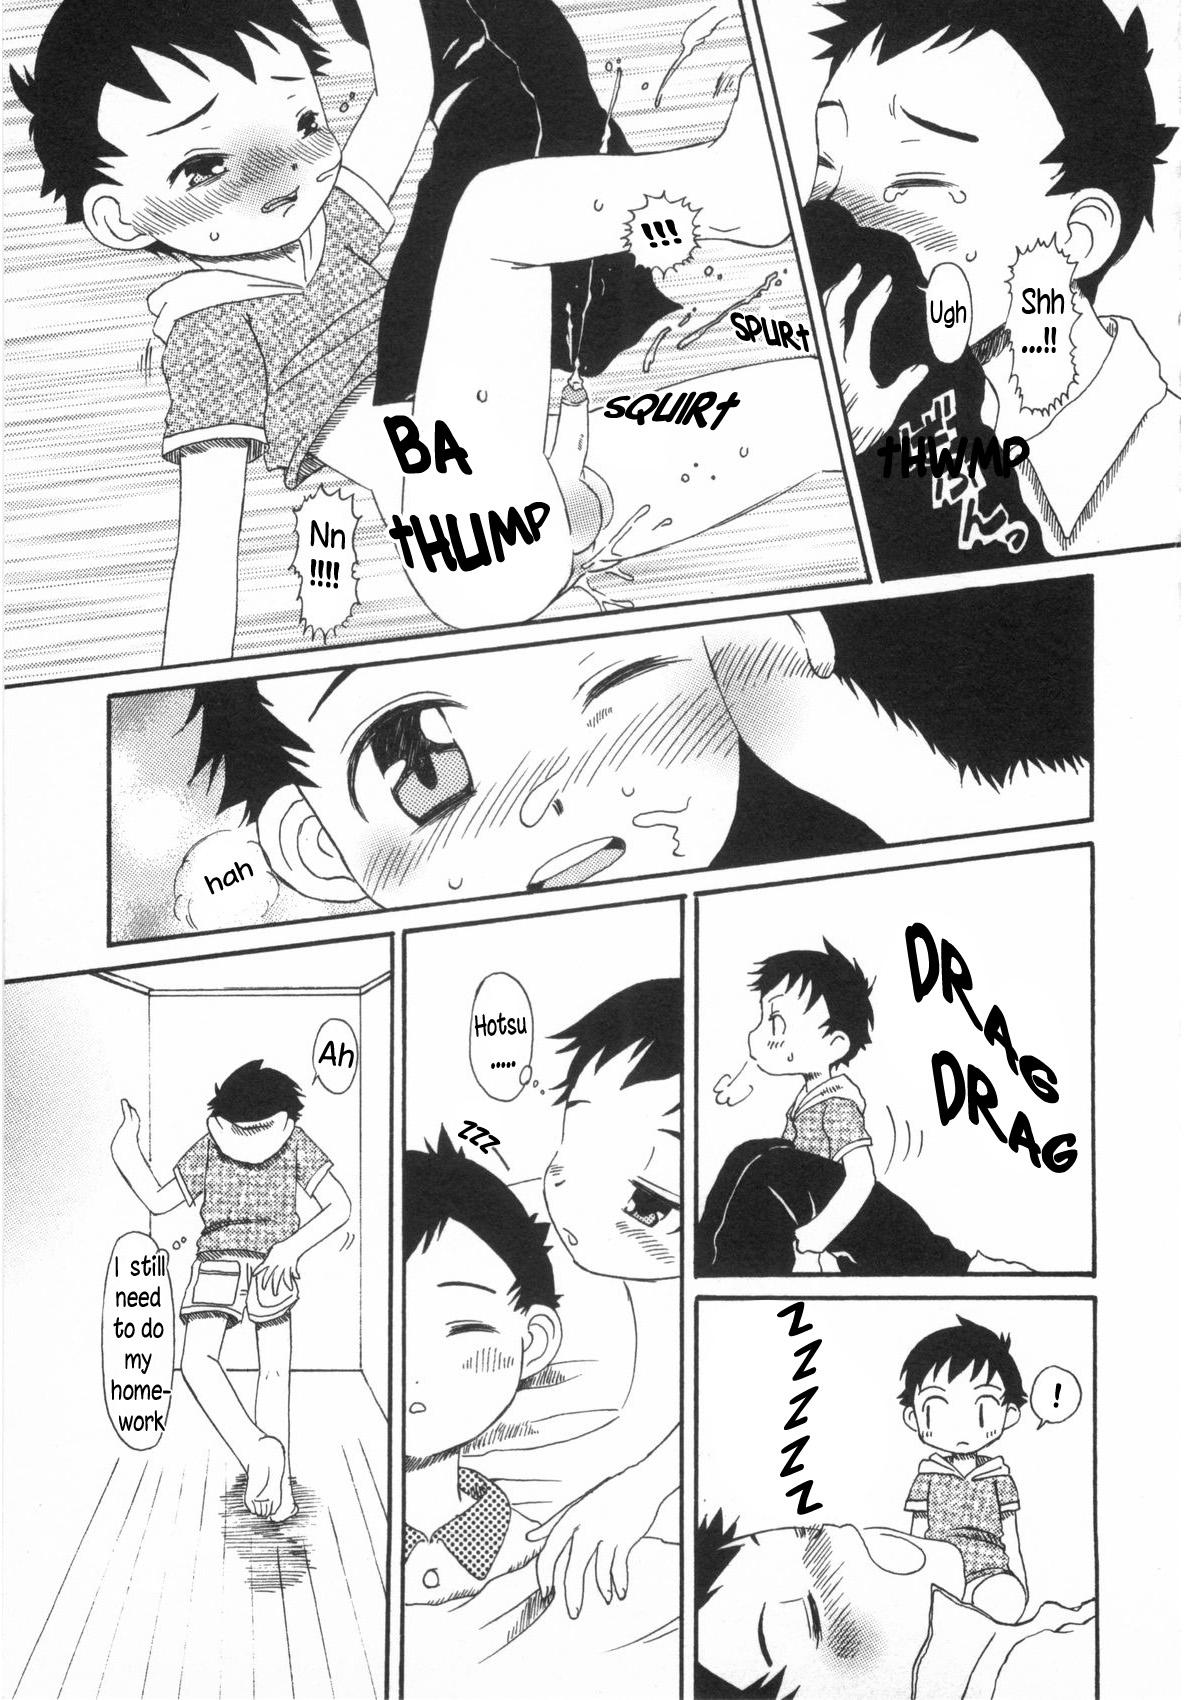 Novinhas Akegata no Kawa Bigtits - Page 9